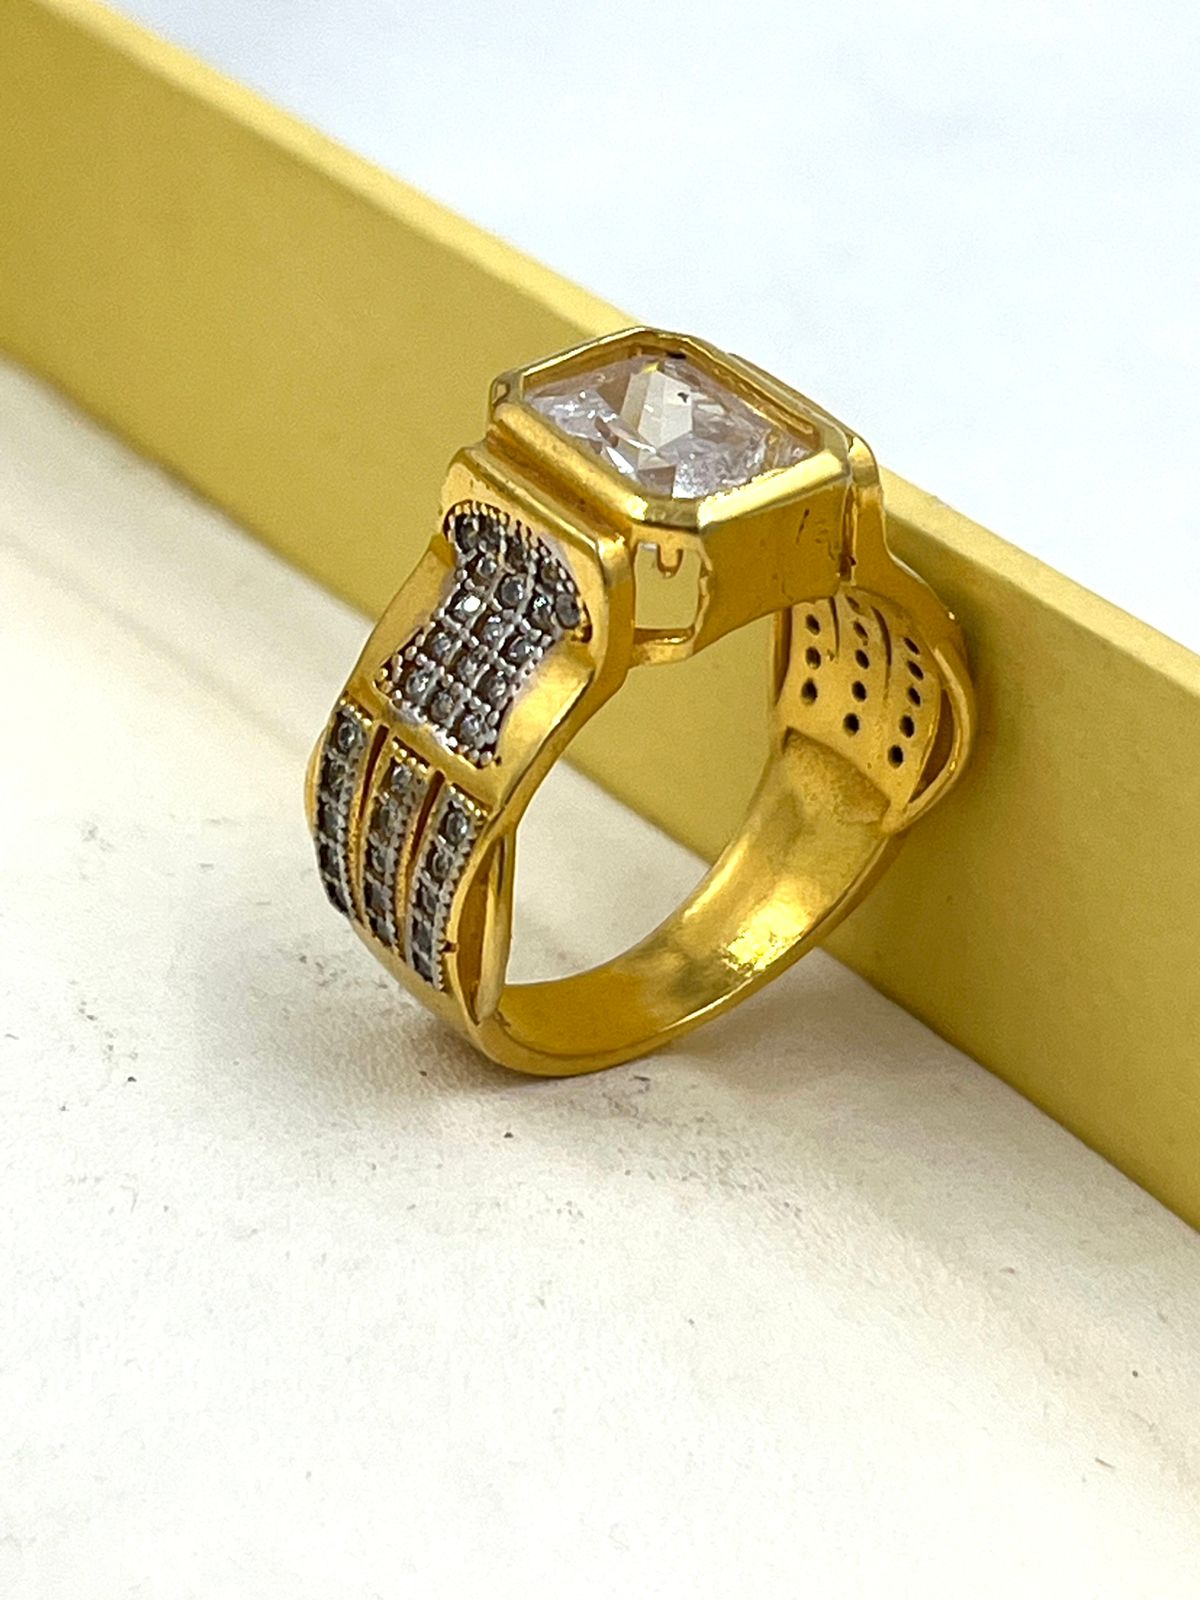 Premium Photo | Gold ring with diamonds